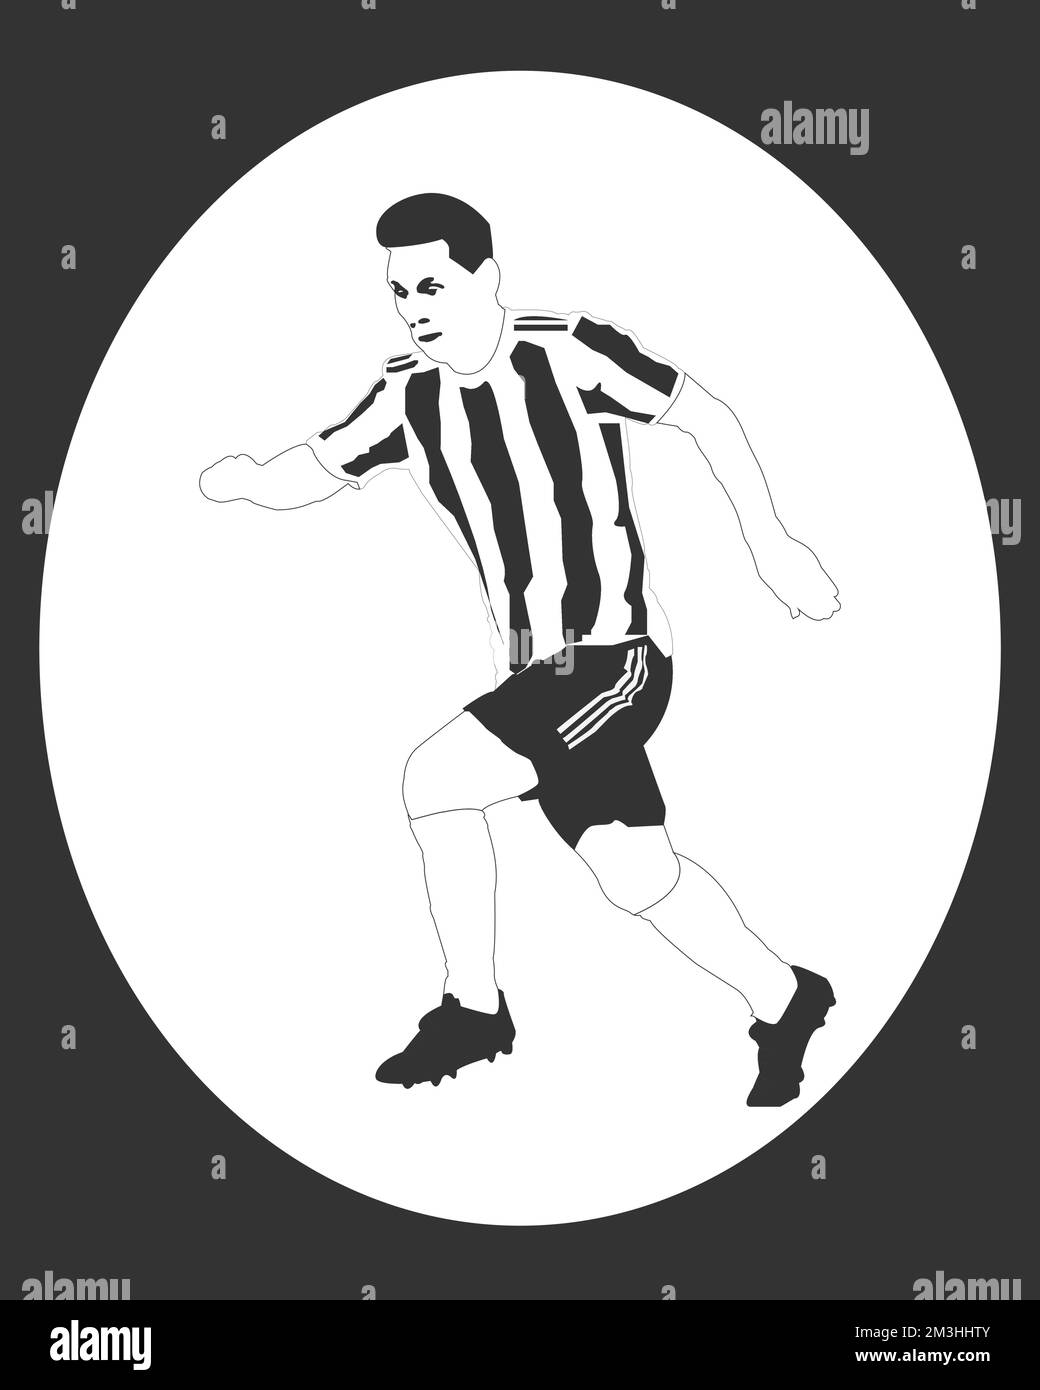 Lionel Messi Argentina footballer Vector Illustration image, Black and White image : Colombo, Sri Lanka – December 16, 2022 Stock Vector